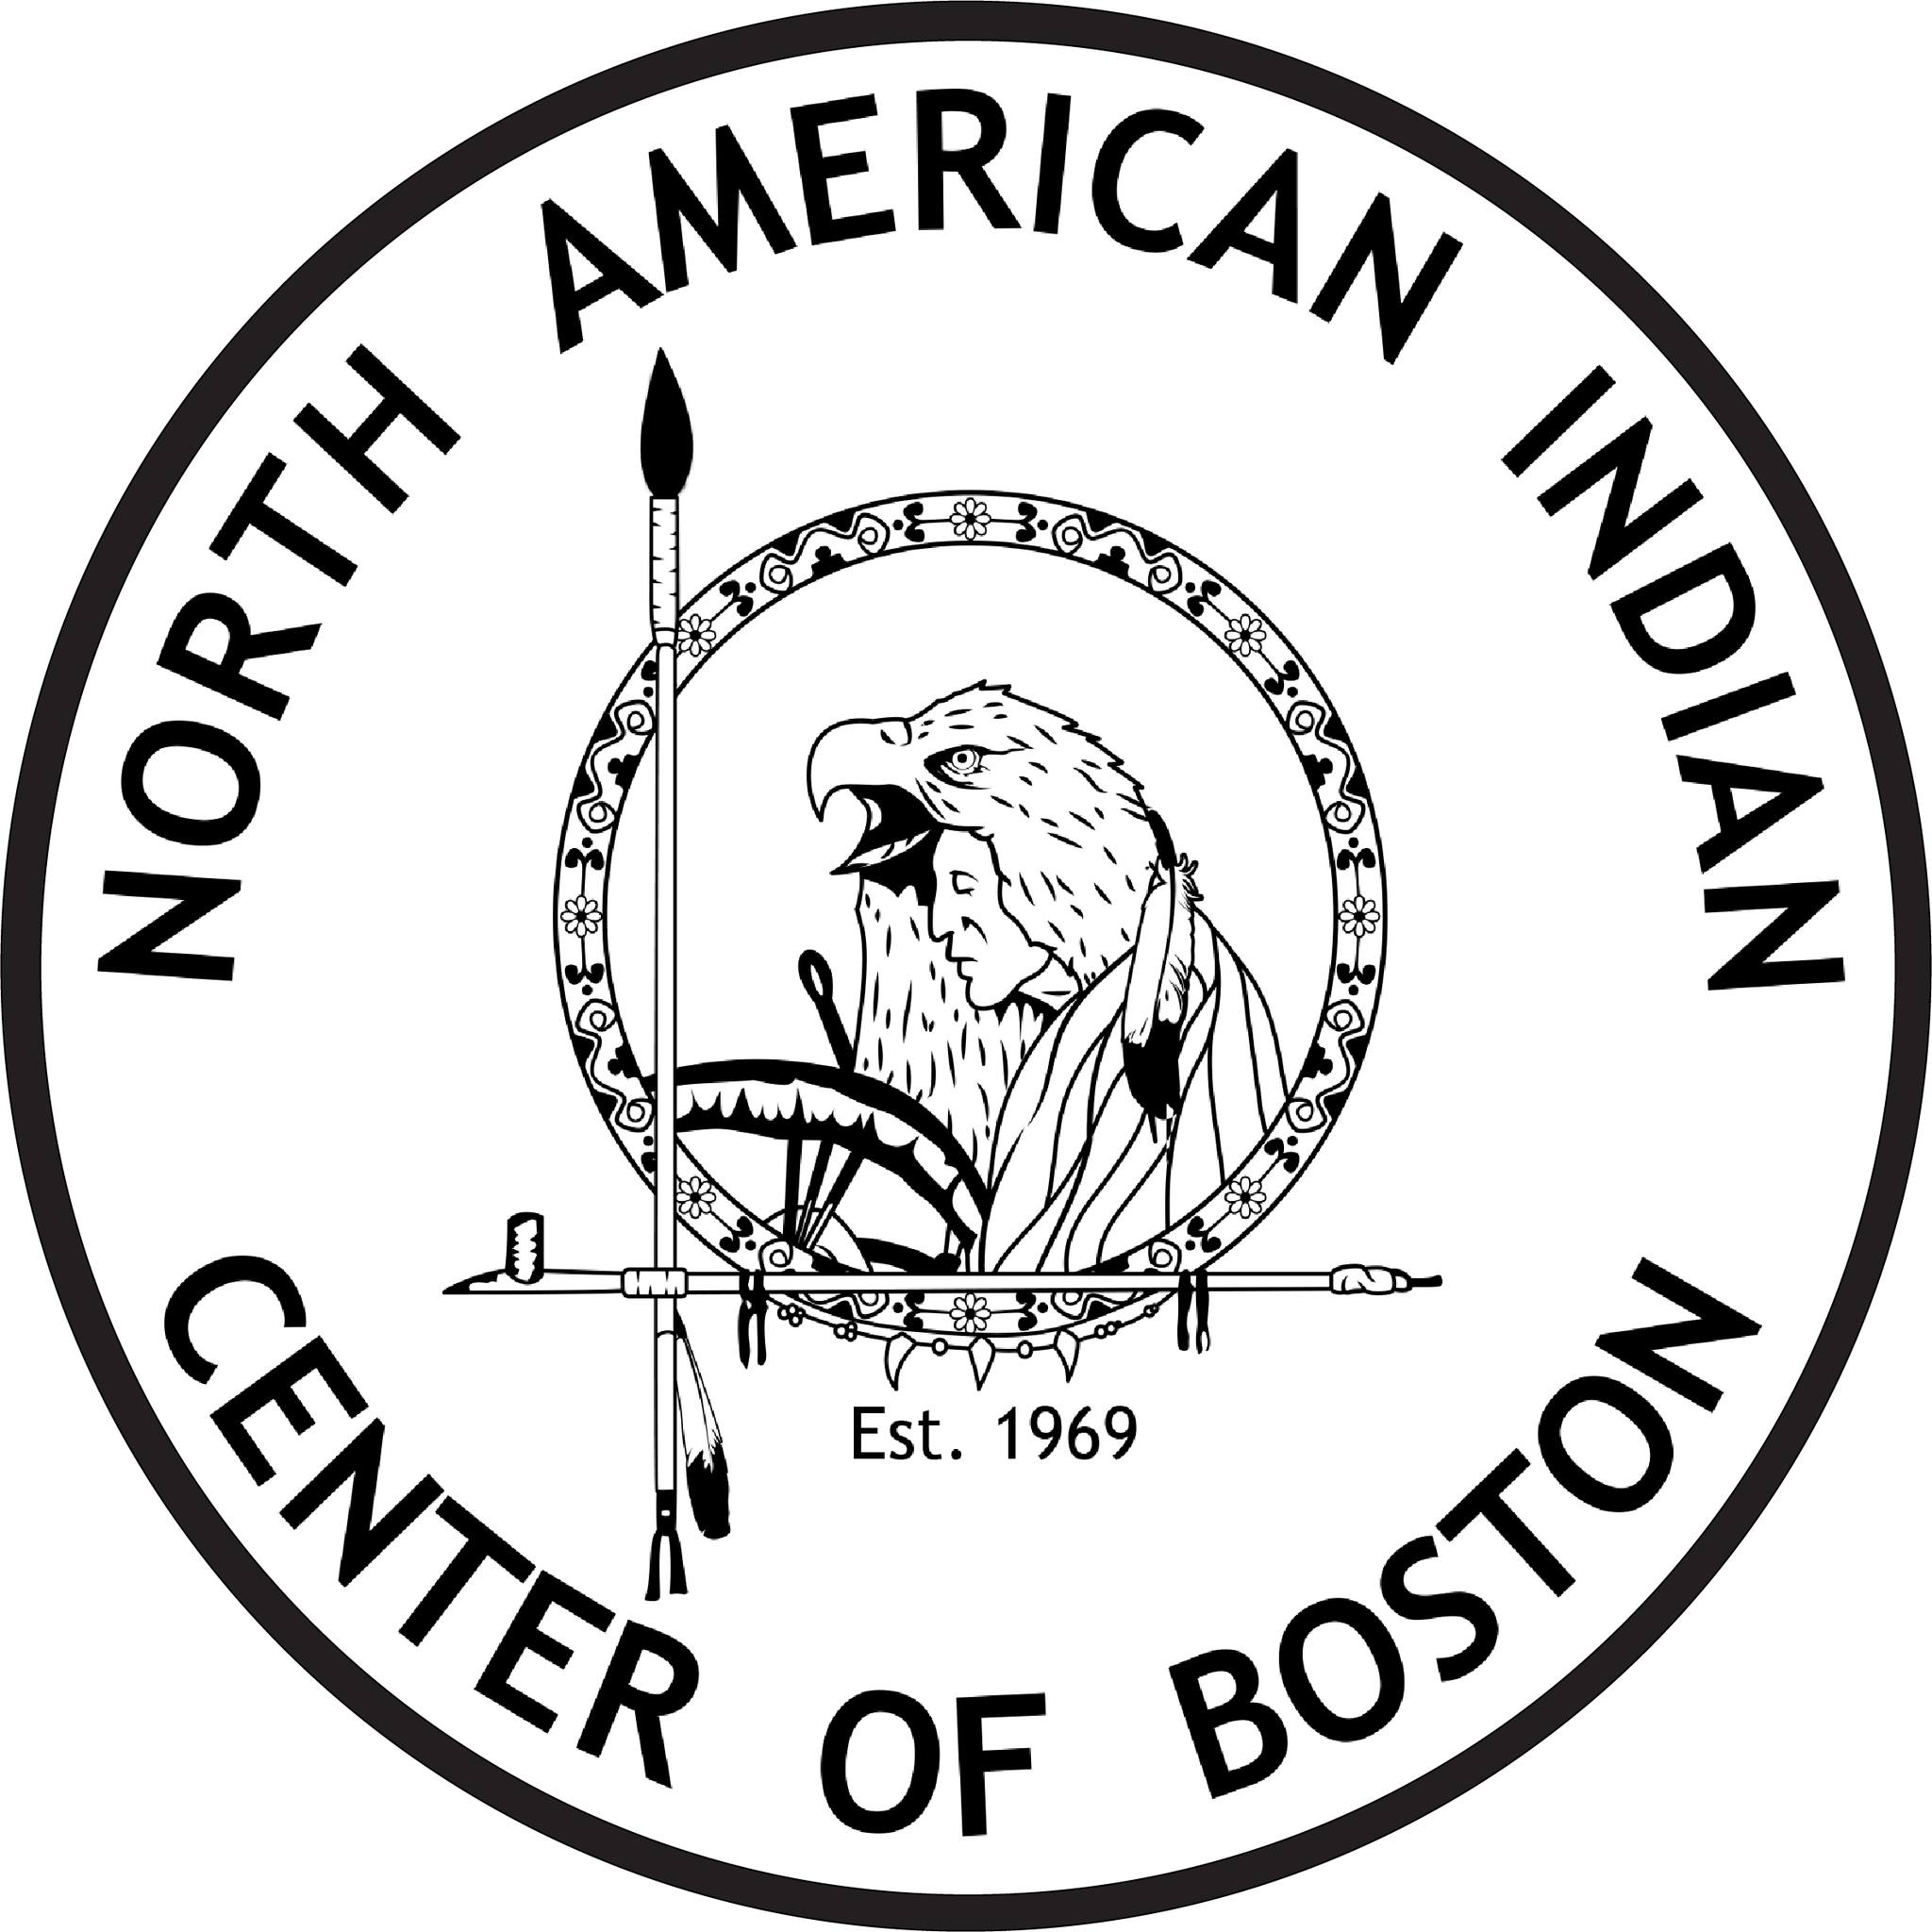 Native American Organization in Massachusetts - North American Indian Center of Boston